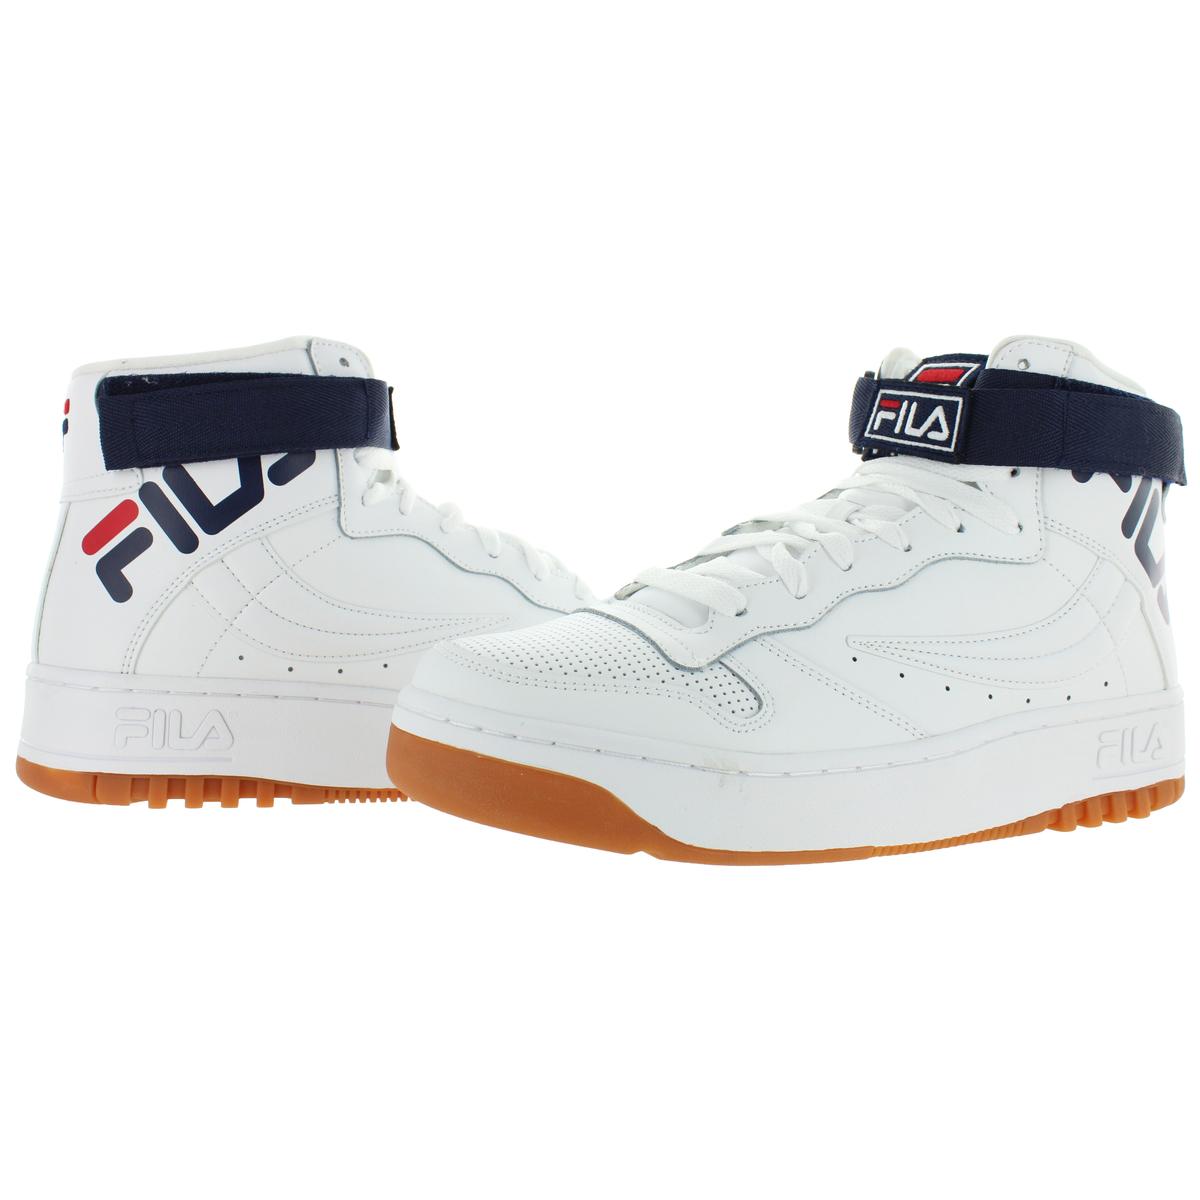 Fila Mens FX-100 Big Logo White High Top Sneakers Shoes 7 Medium (D) BHFO 8274 | eBay